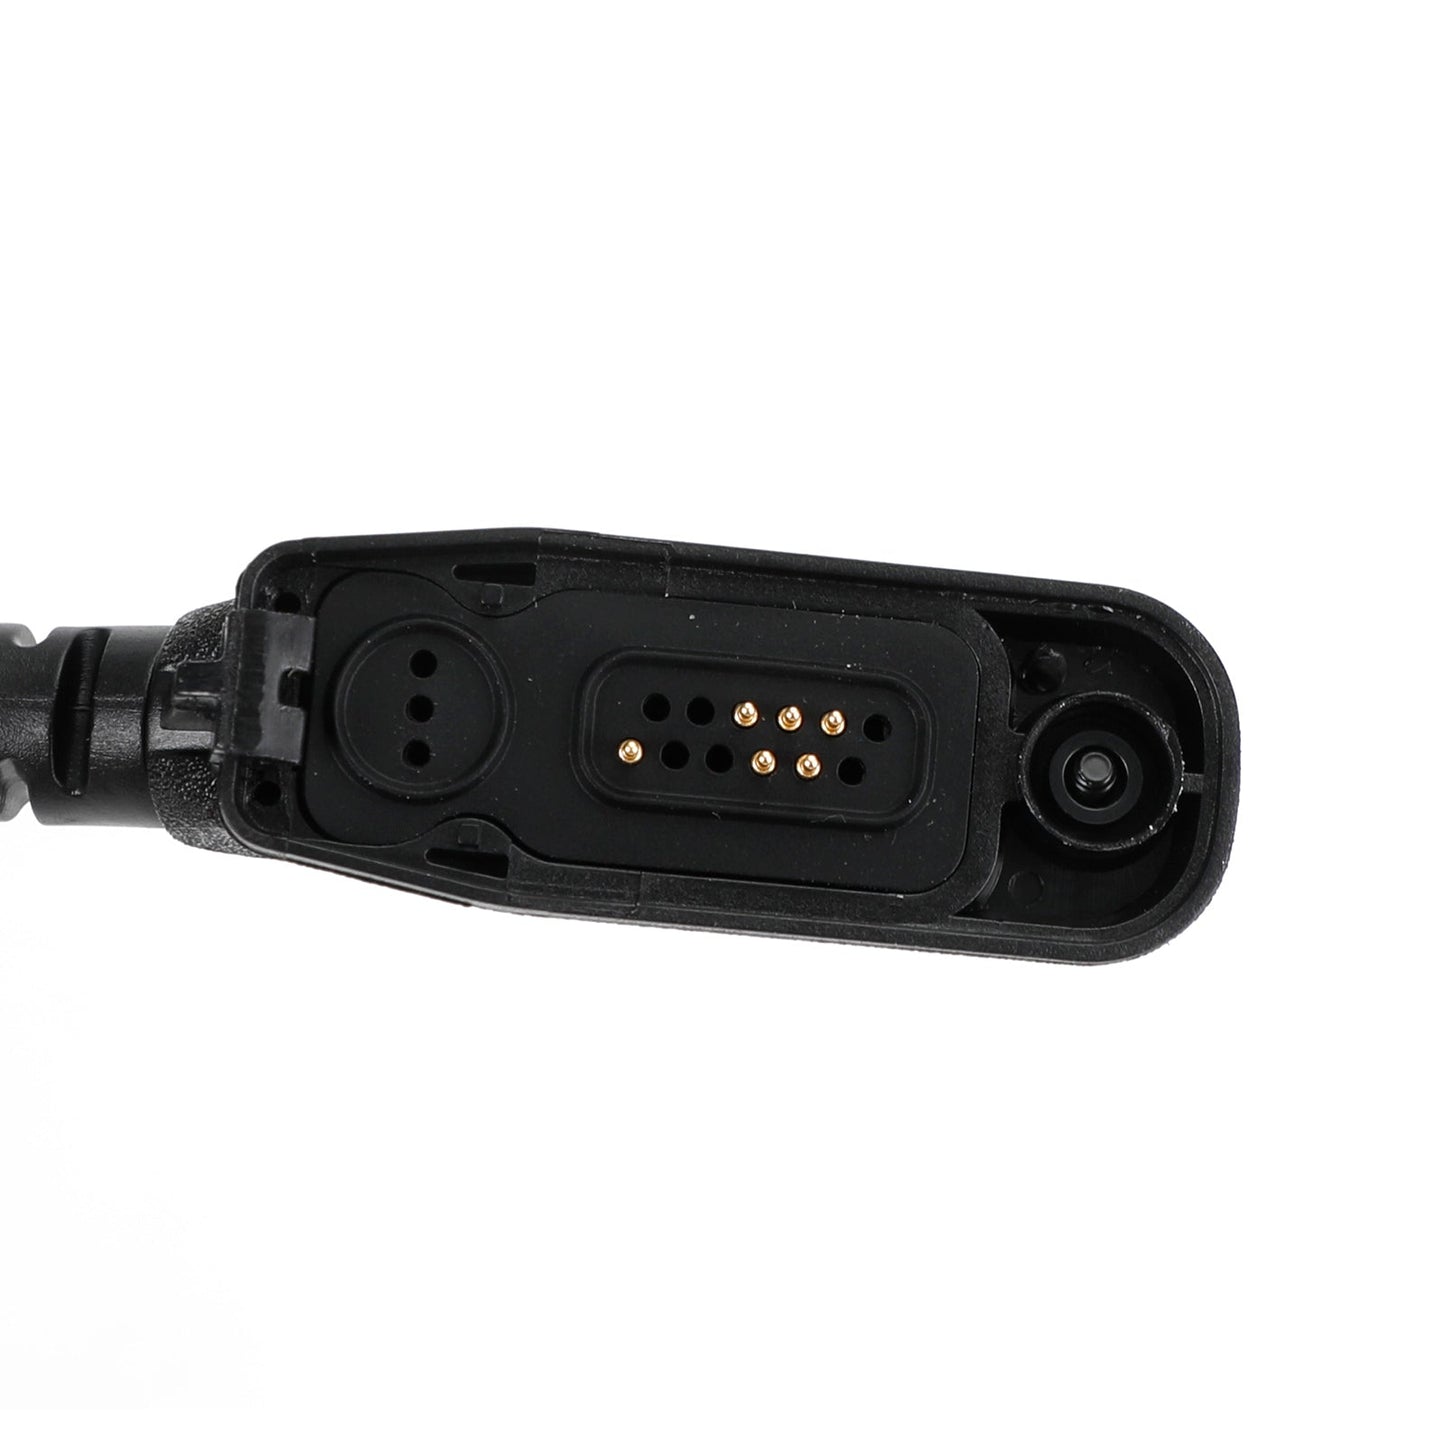 Taktischer U94 PTT-Kabelstecker C2 Headset-Adapter für XPR6300 XPR6350 XPR6380